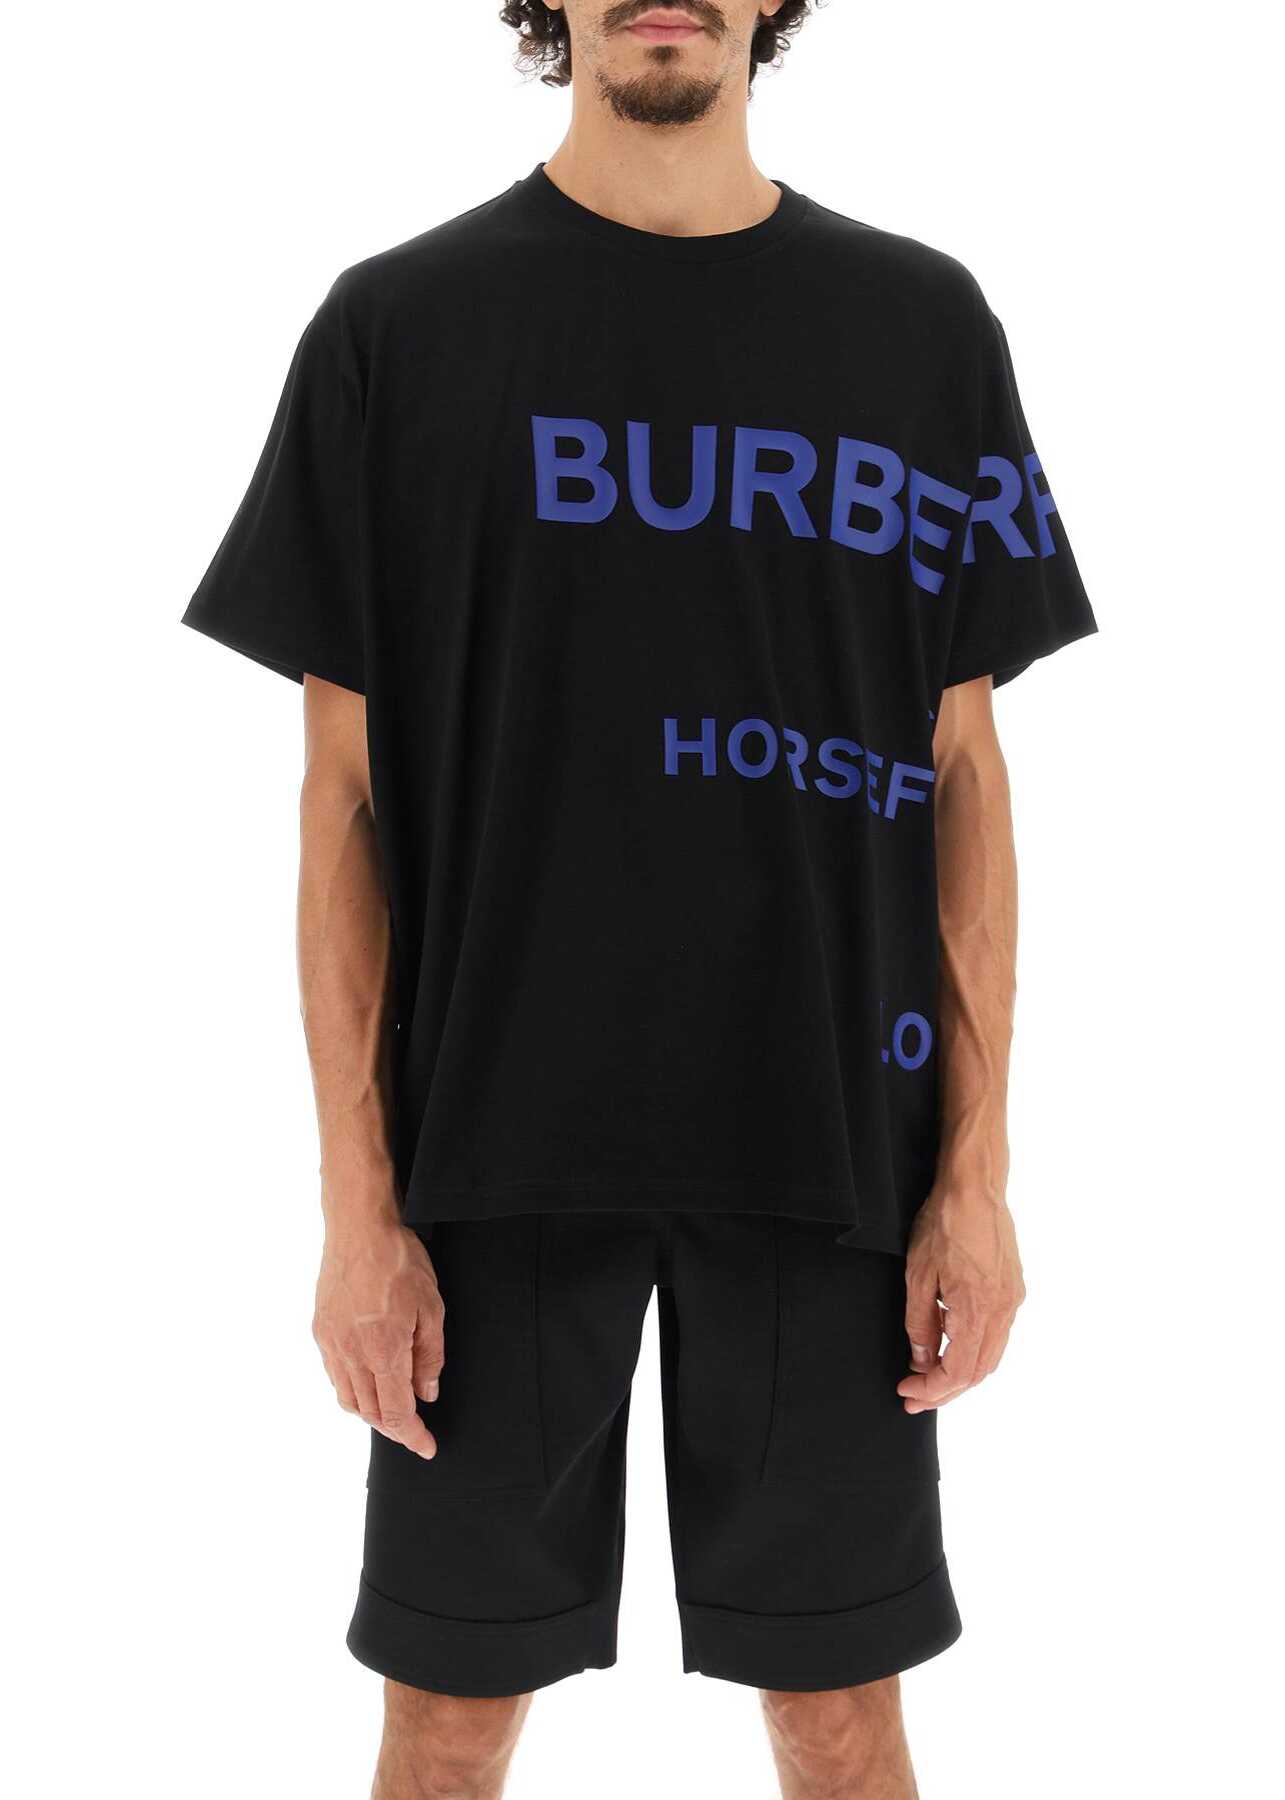 Burberry Horseferry Lettering Print T-Shirt BLACK BLUE